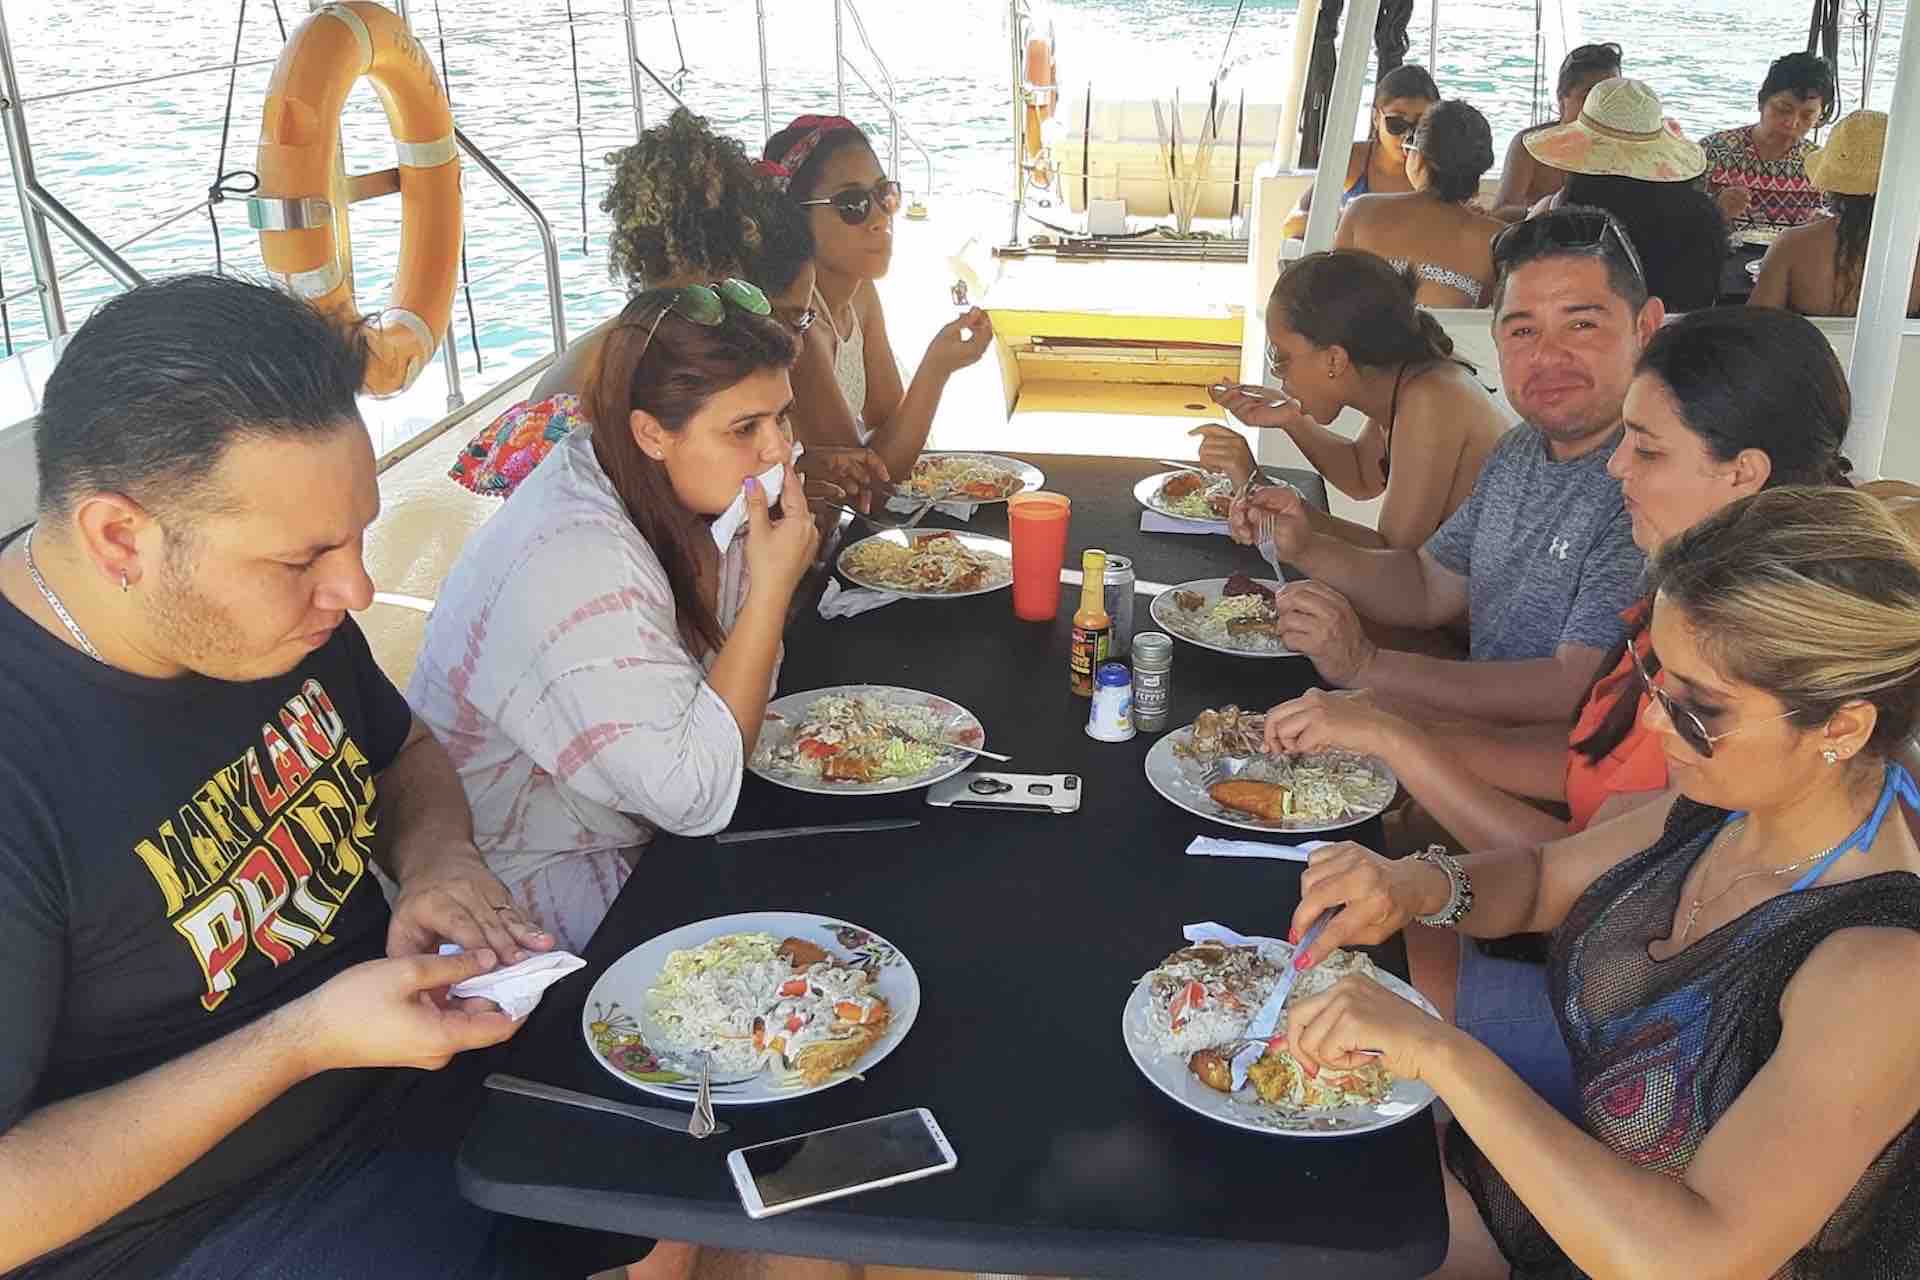 Manga Taboga island sailboat charter lunch guests eating